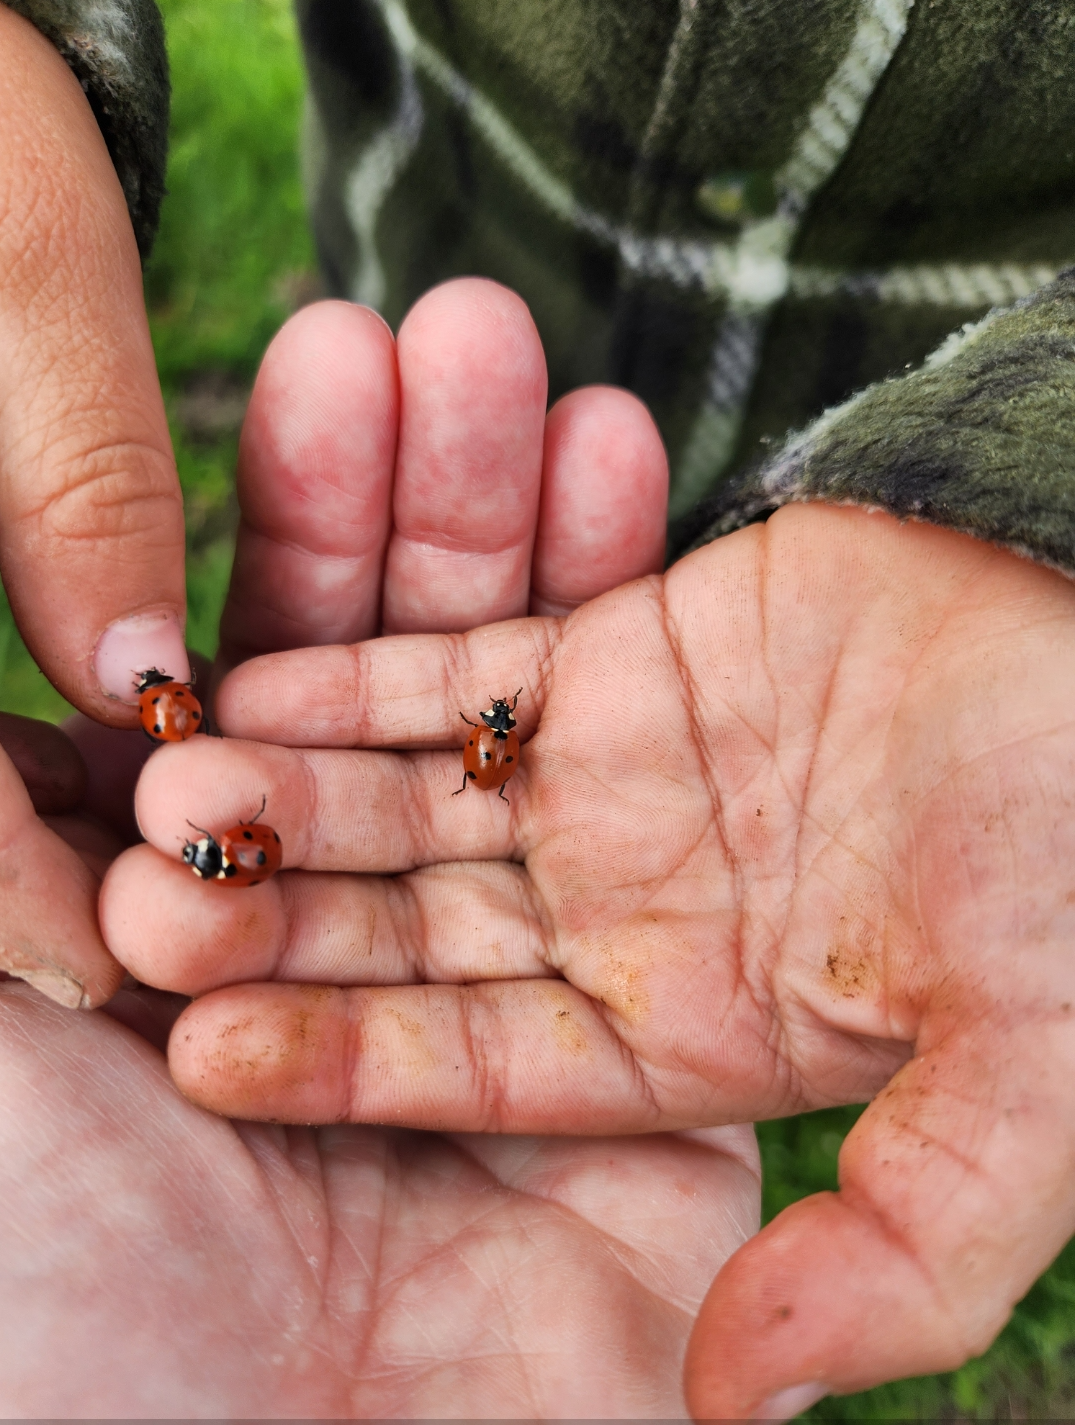 LIttle kids hands holding ladybugs